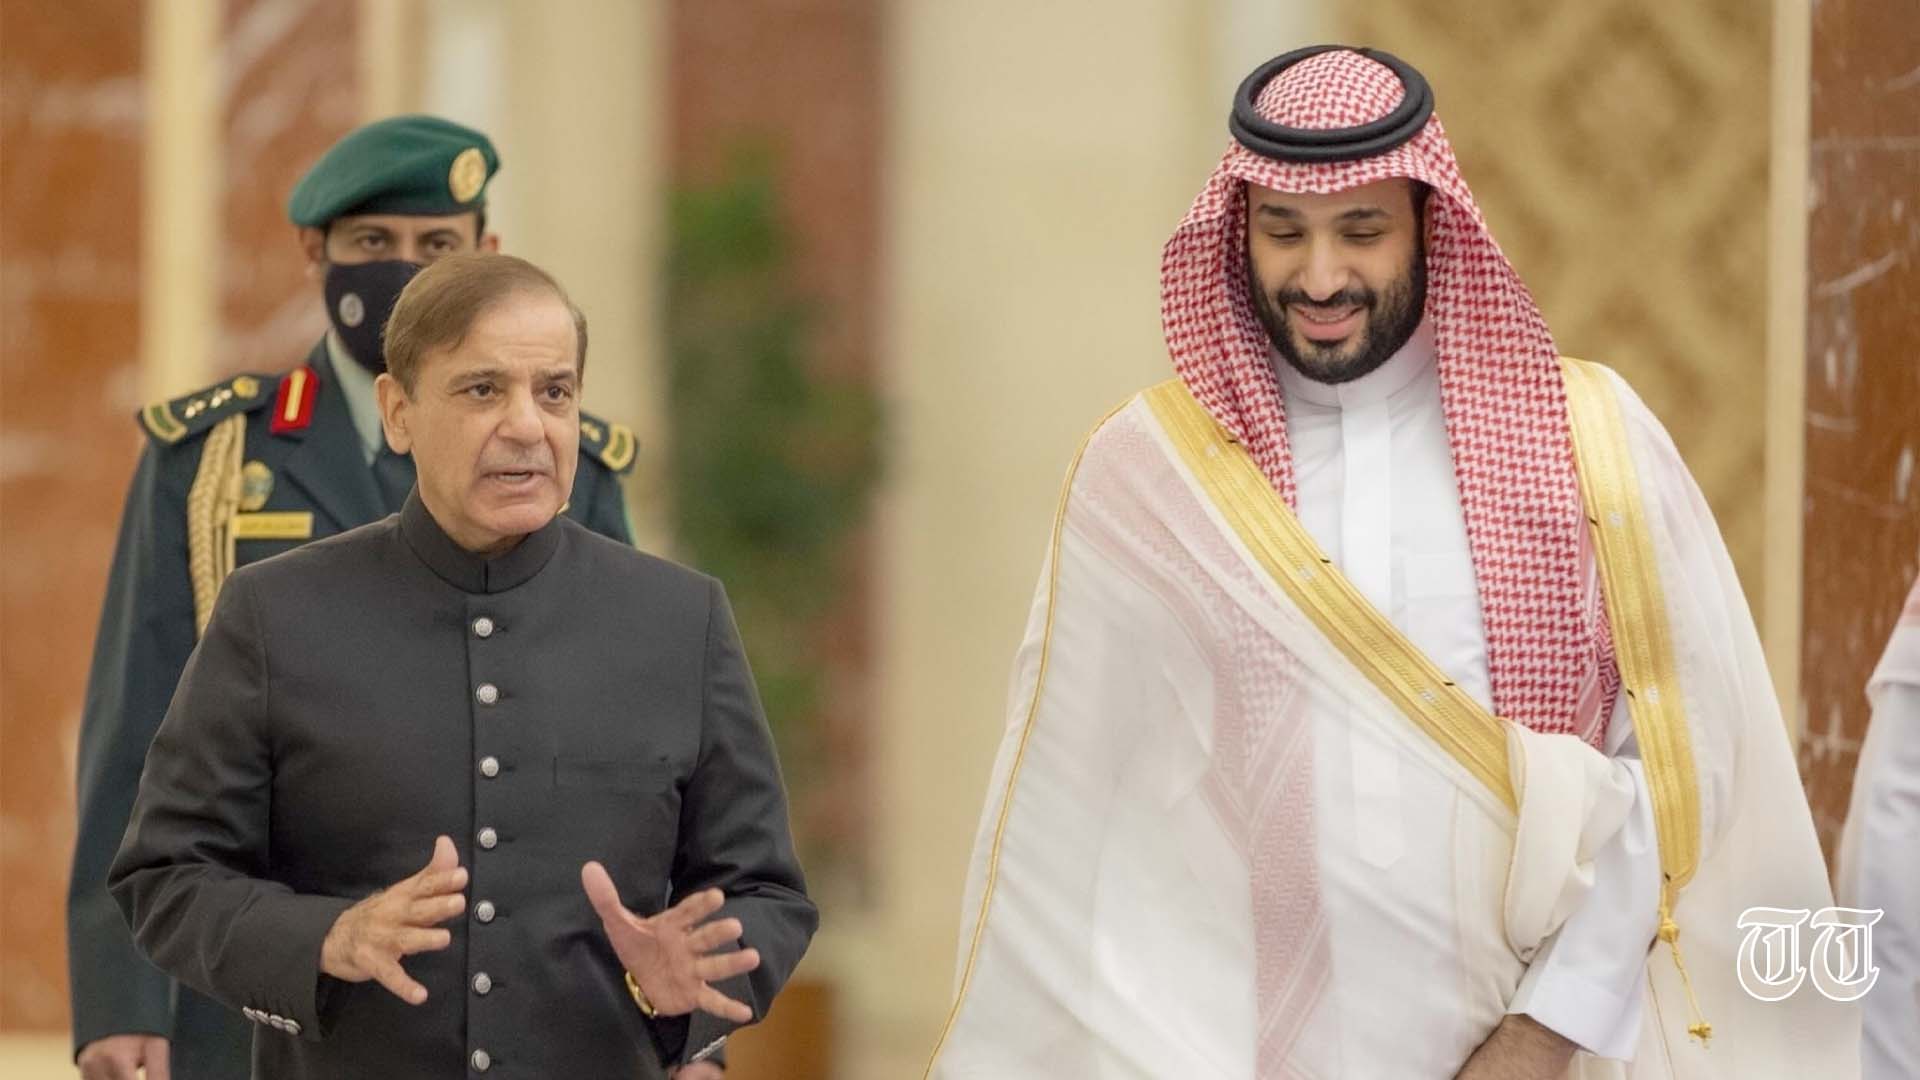 A file photo is shown of prime minister Shehbaz Sharif with Saudi Crown Prince Muhammad bin Salman.